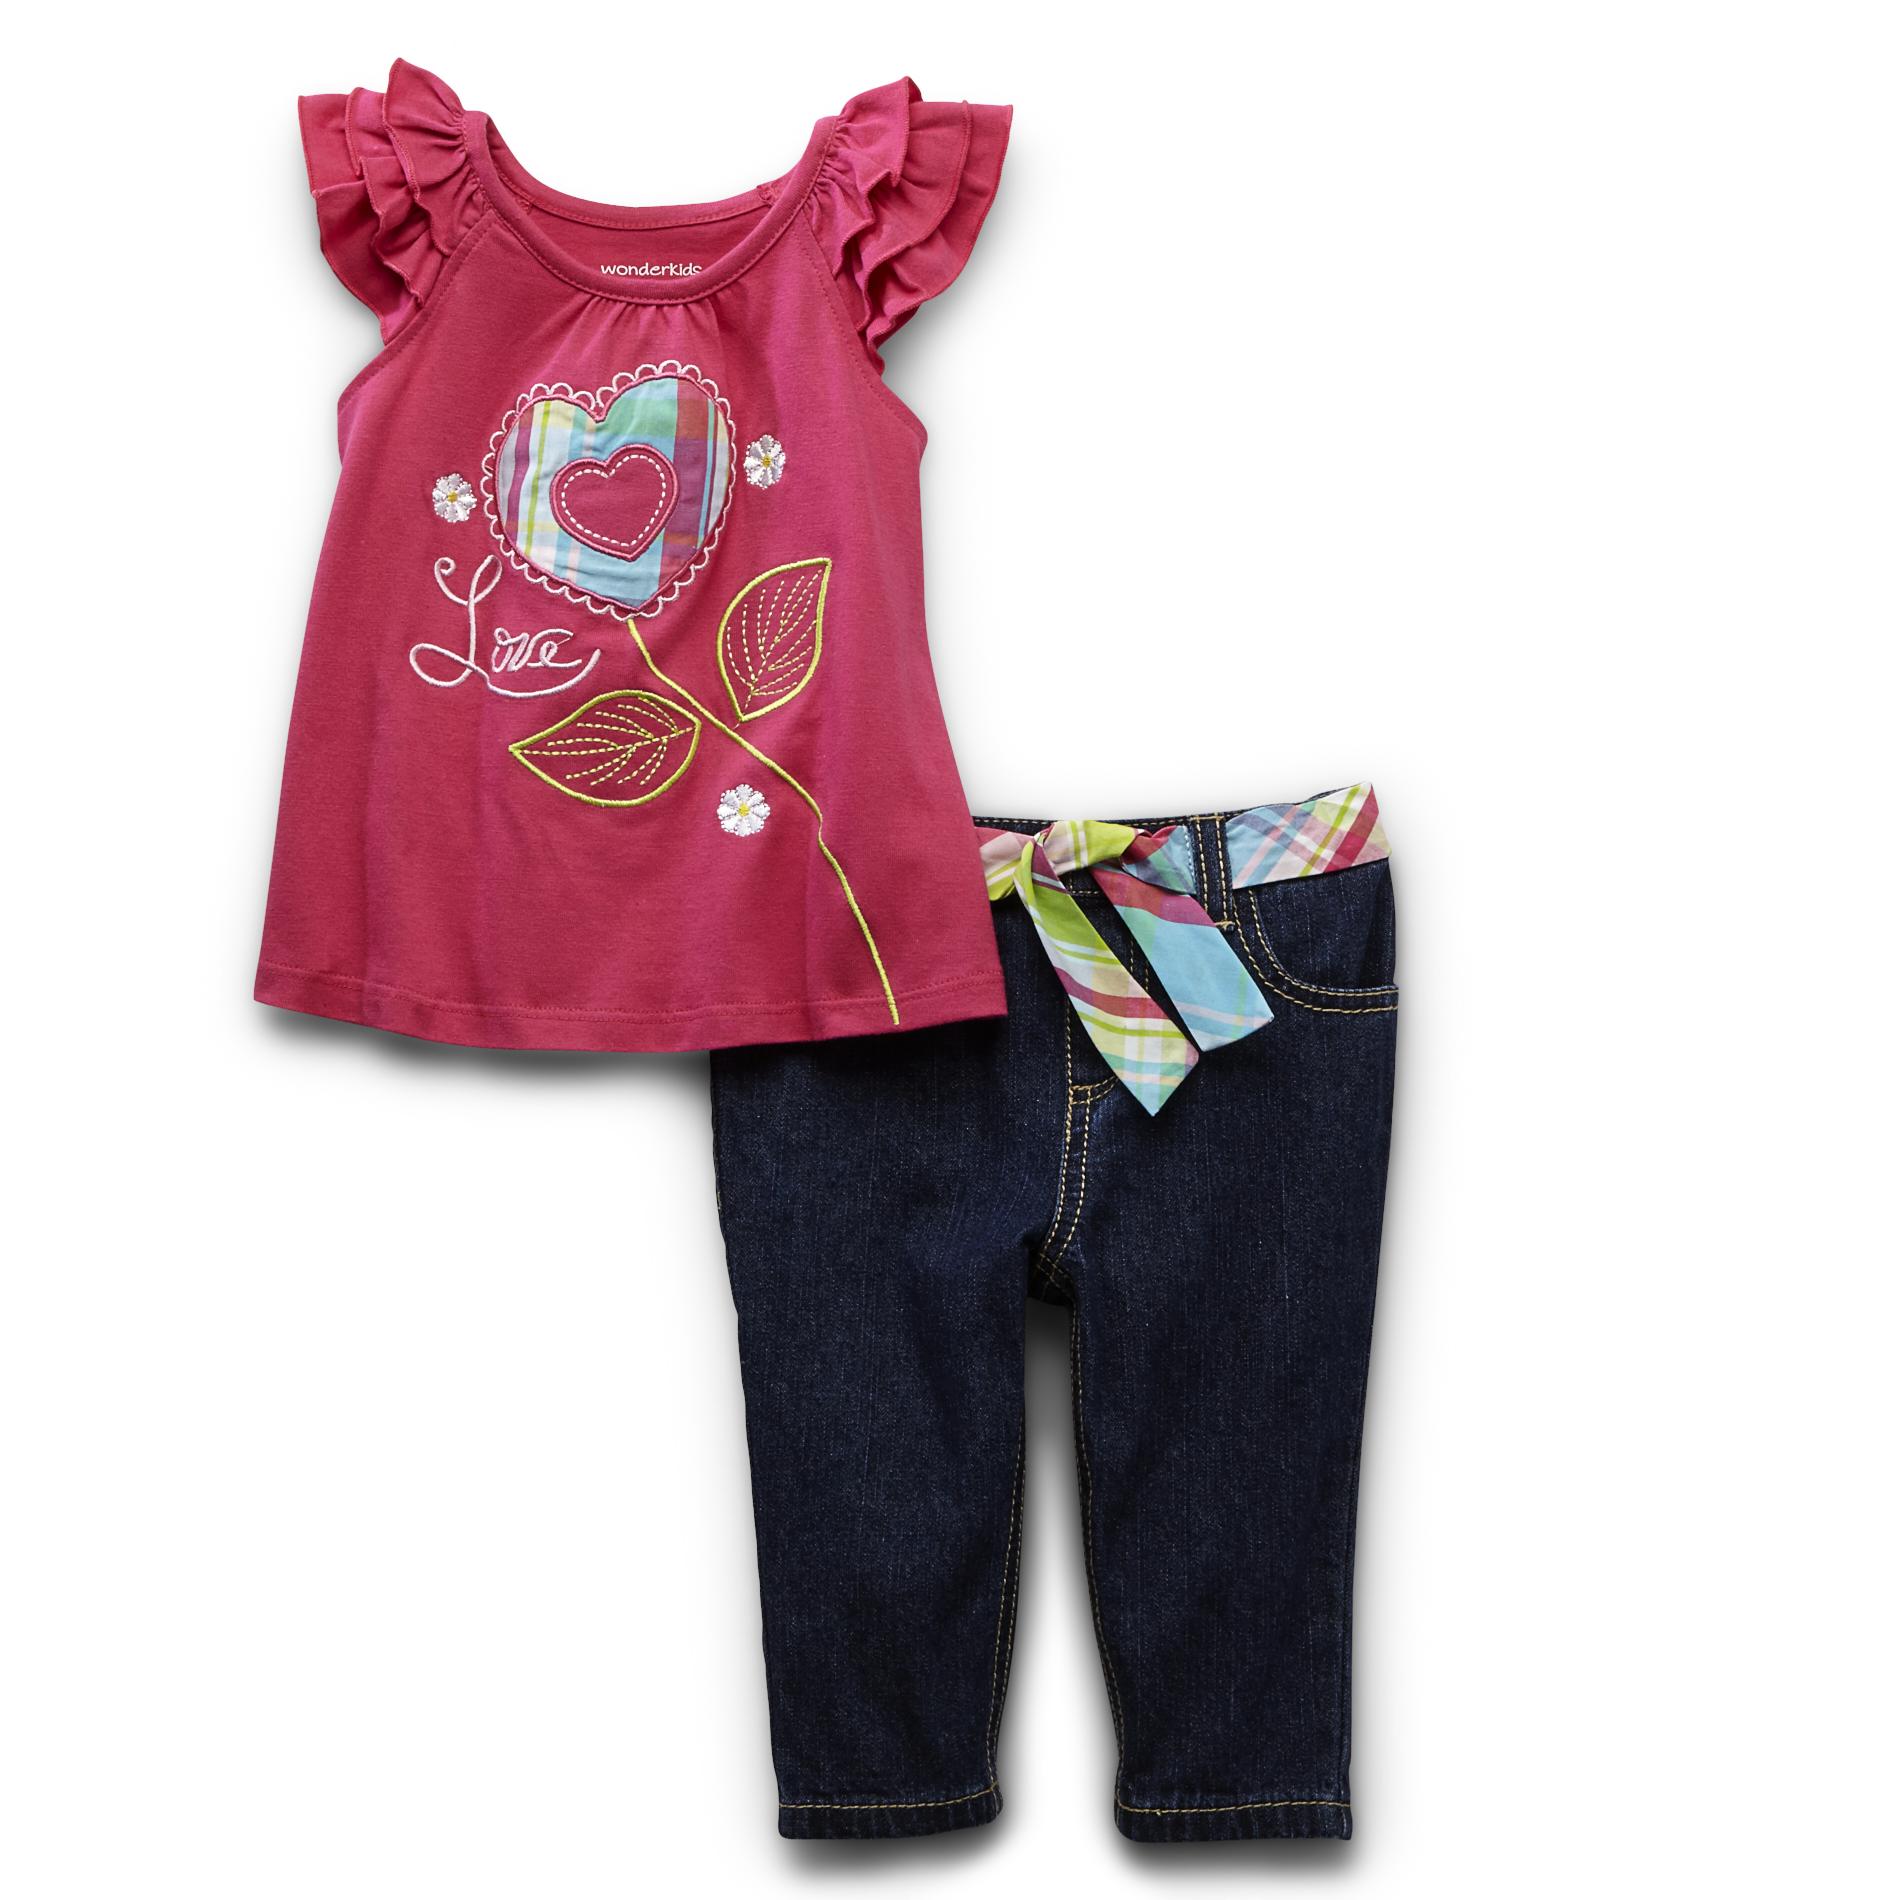 WonderKids Infant & Toddler Girl's Top & Jeans - Love